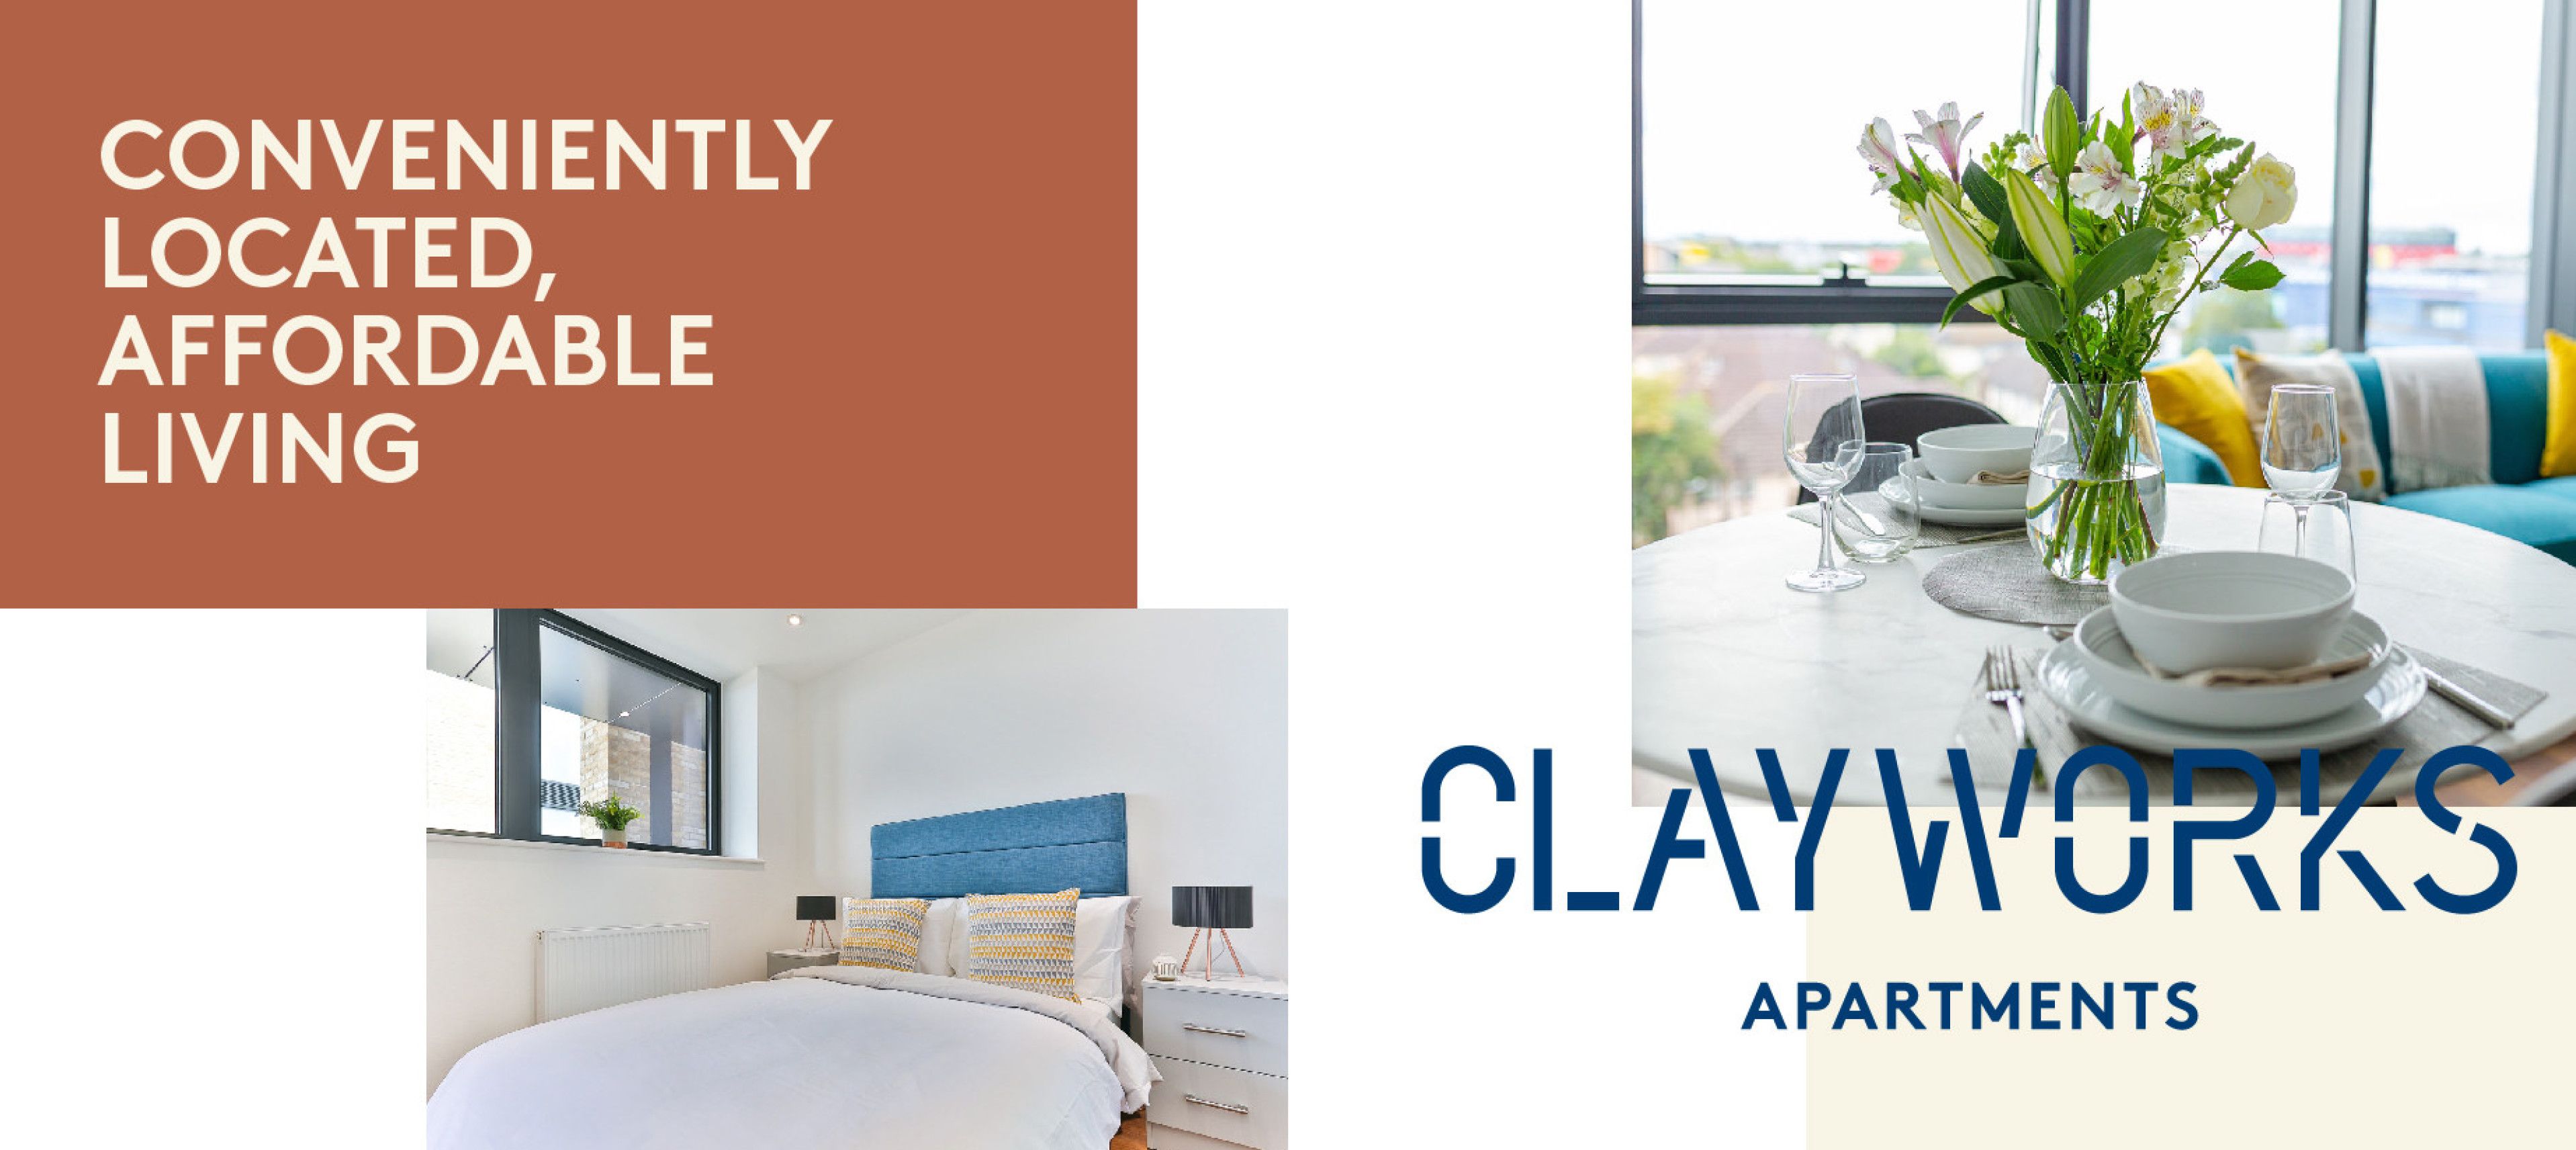 Clayworks affordable living 